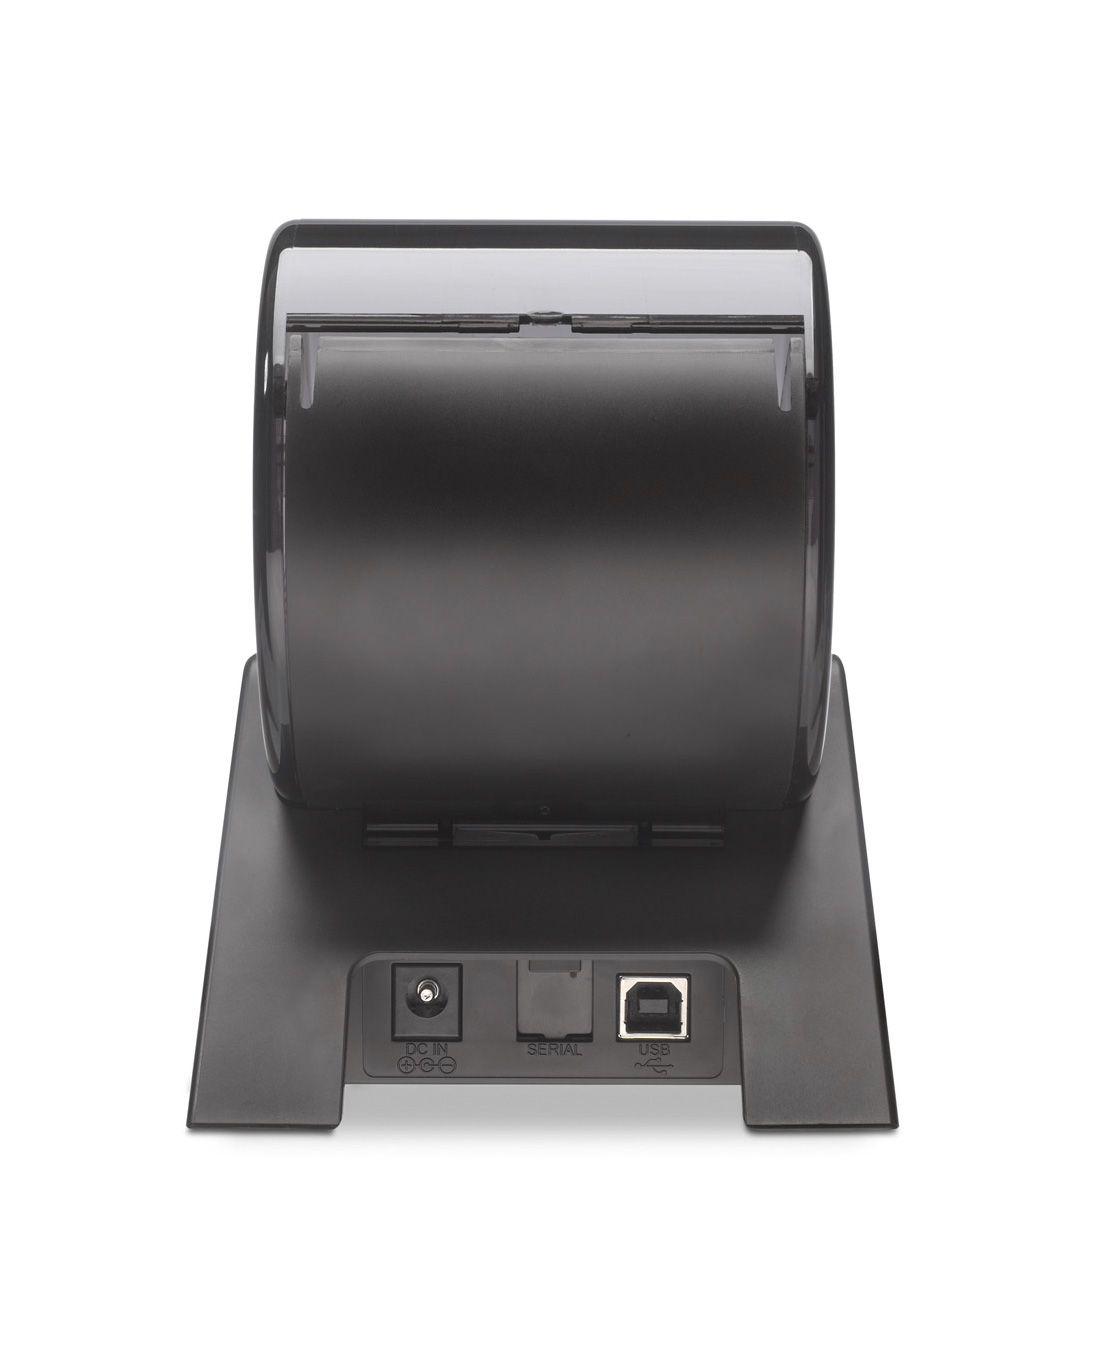 SLP 650/650SE - Smart Label Printers | Seiko Instruments USA